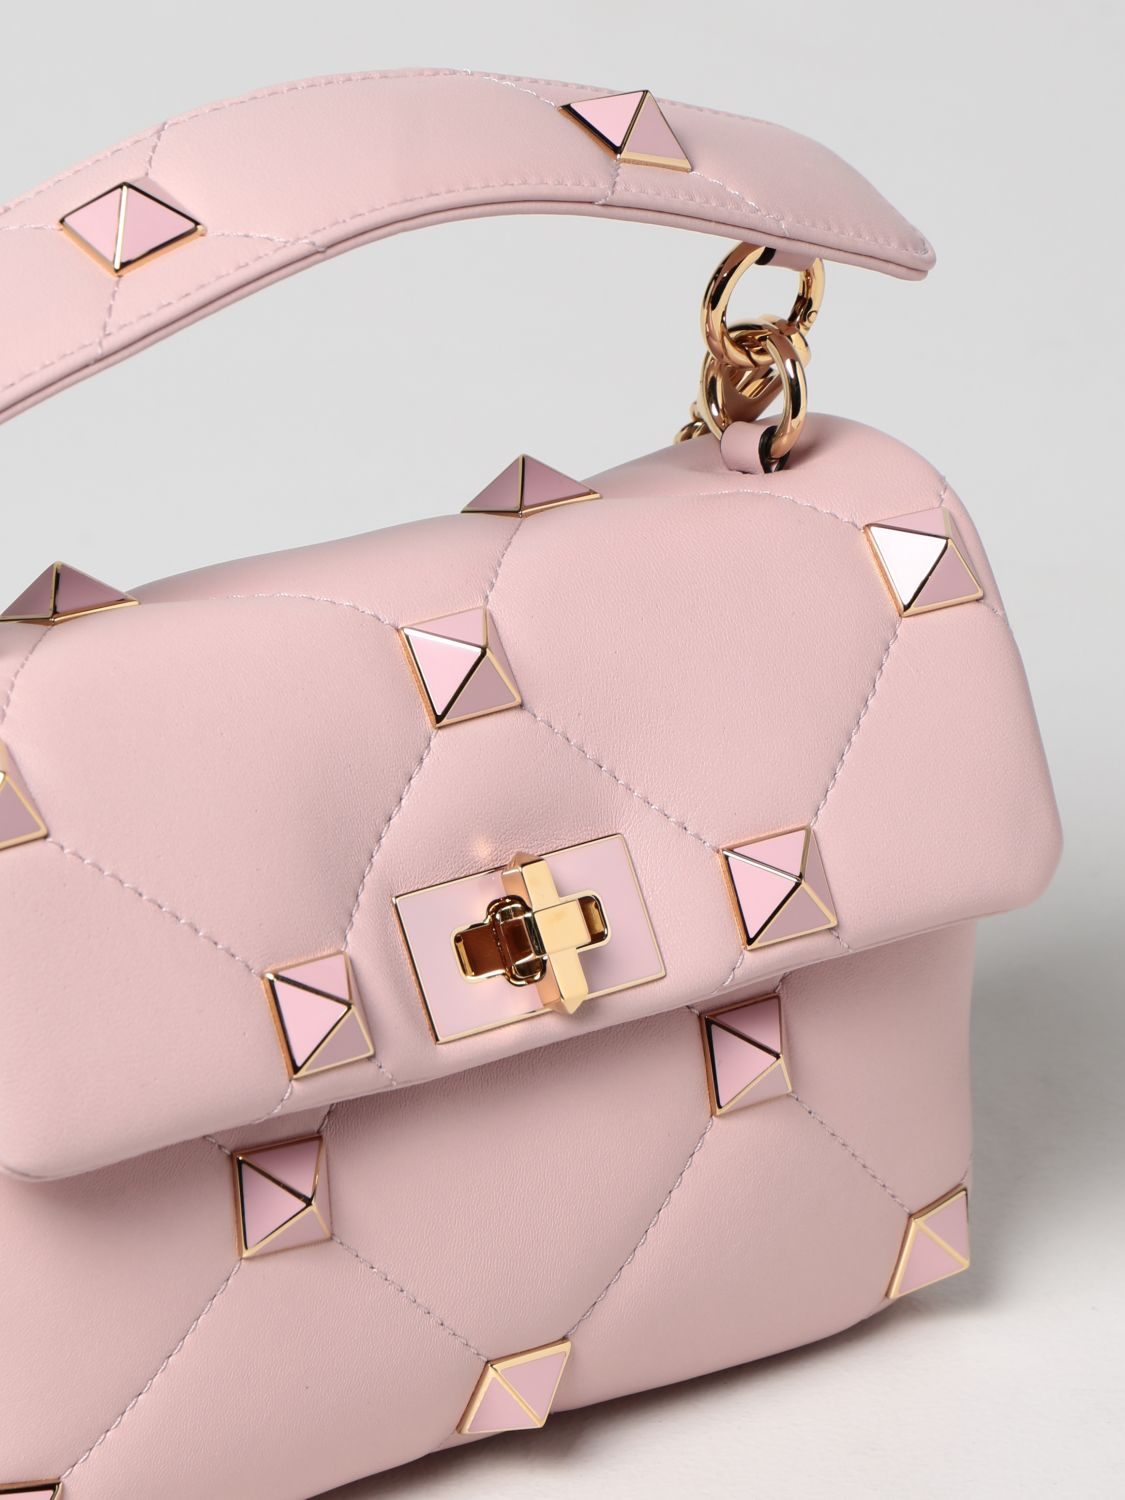 VALENTINO GARAVANI: Roman nappa bag - Baby Pink  Valentino Garavani  handbag XW2B0I82PTH online at